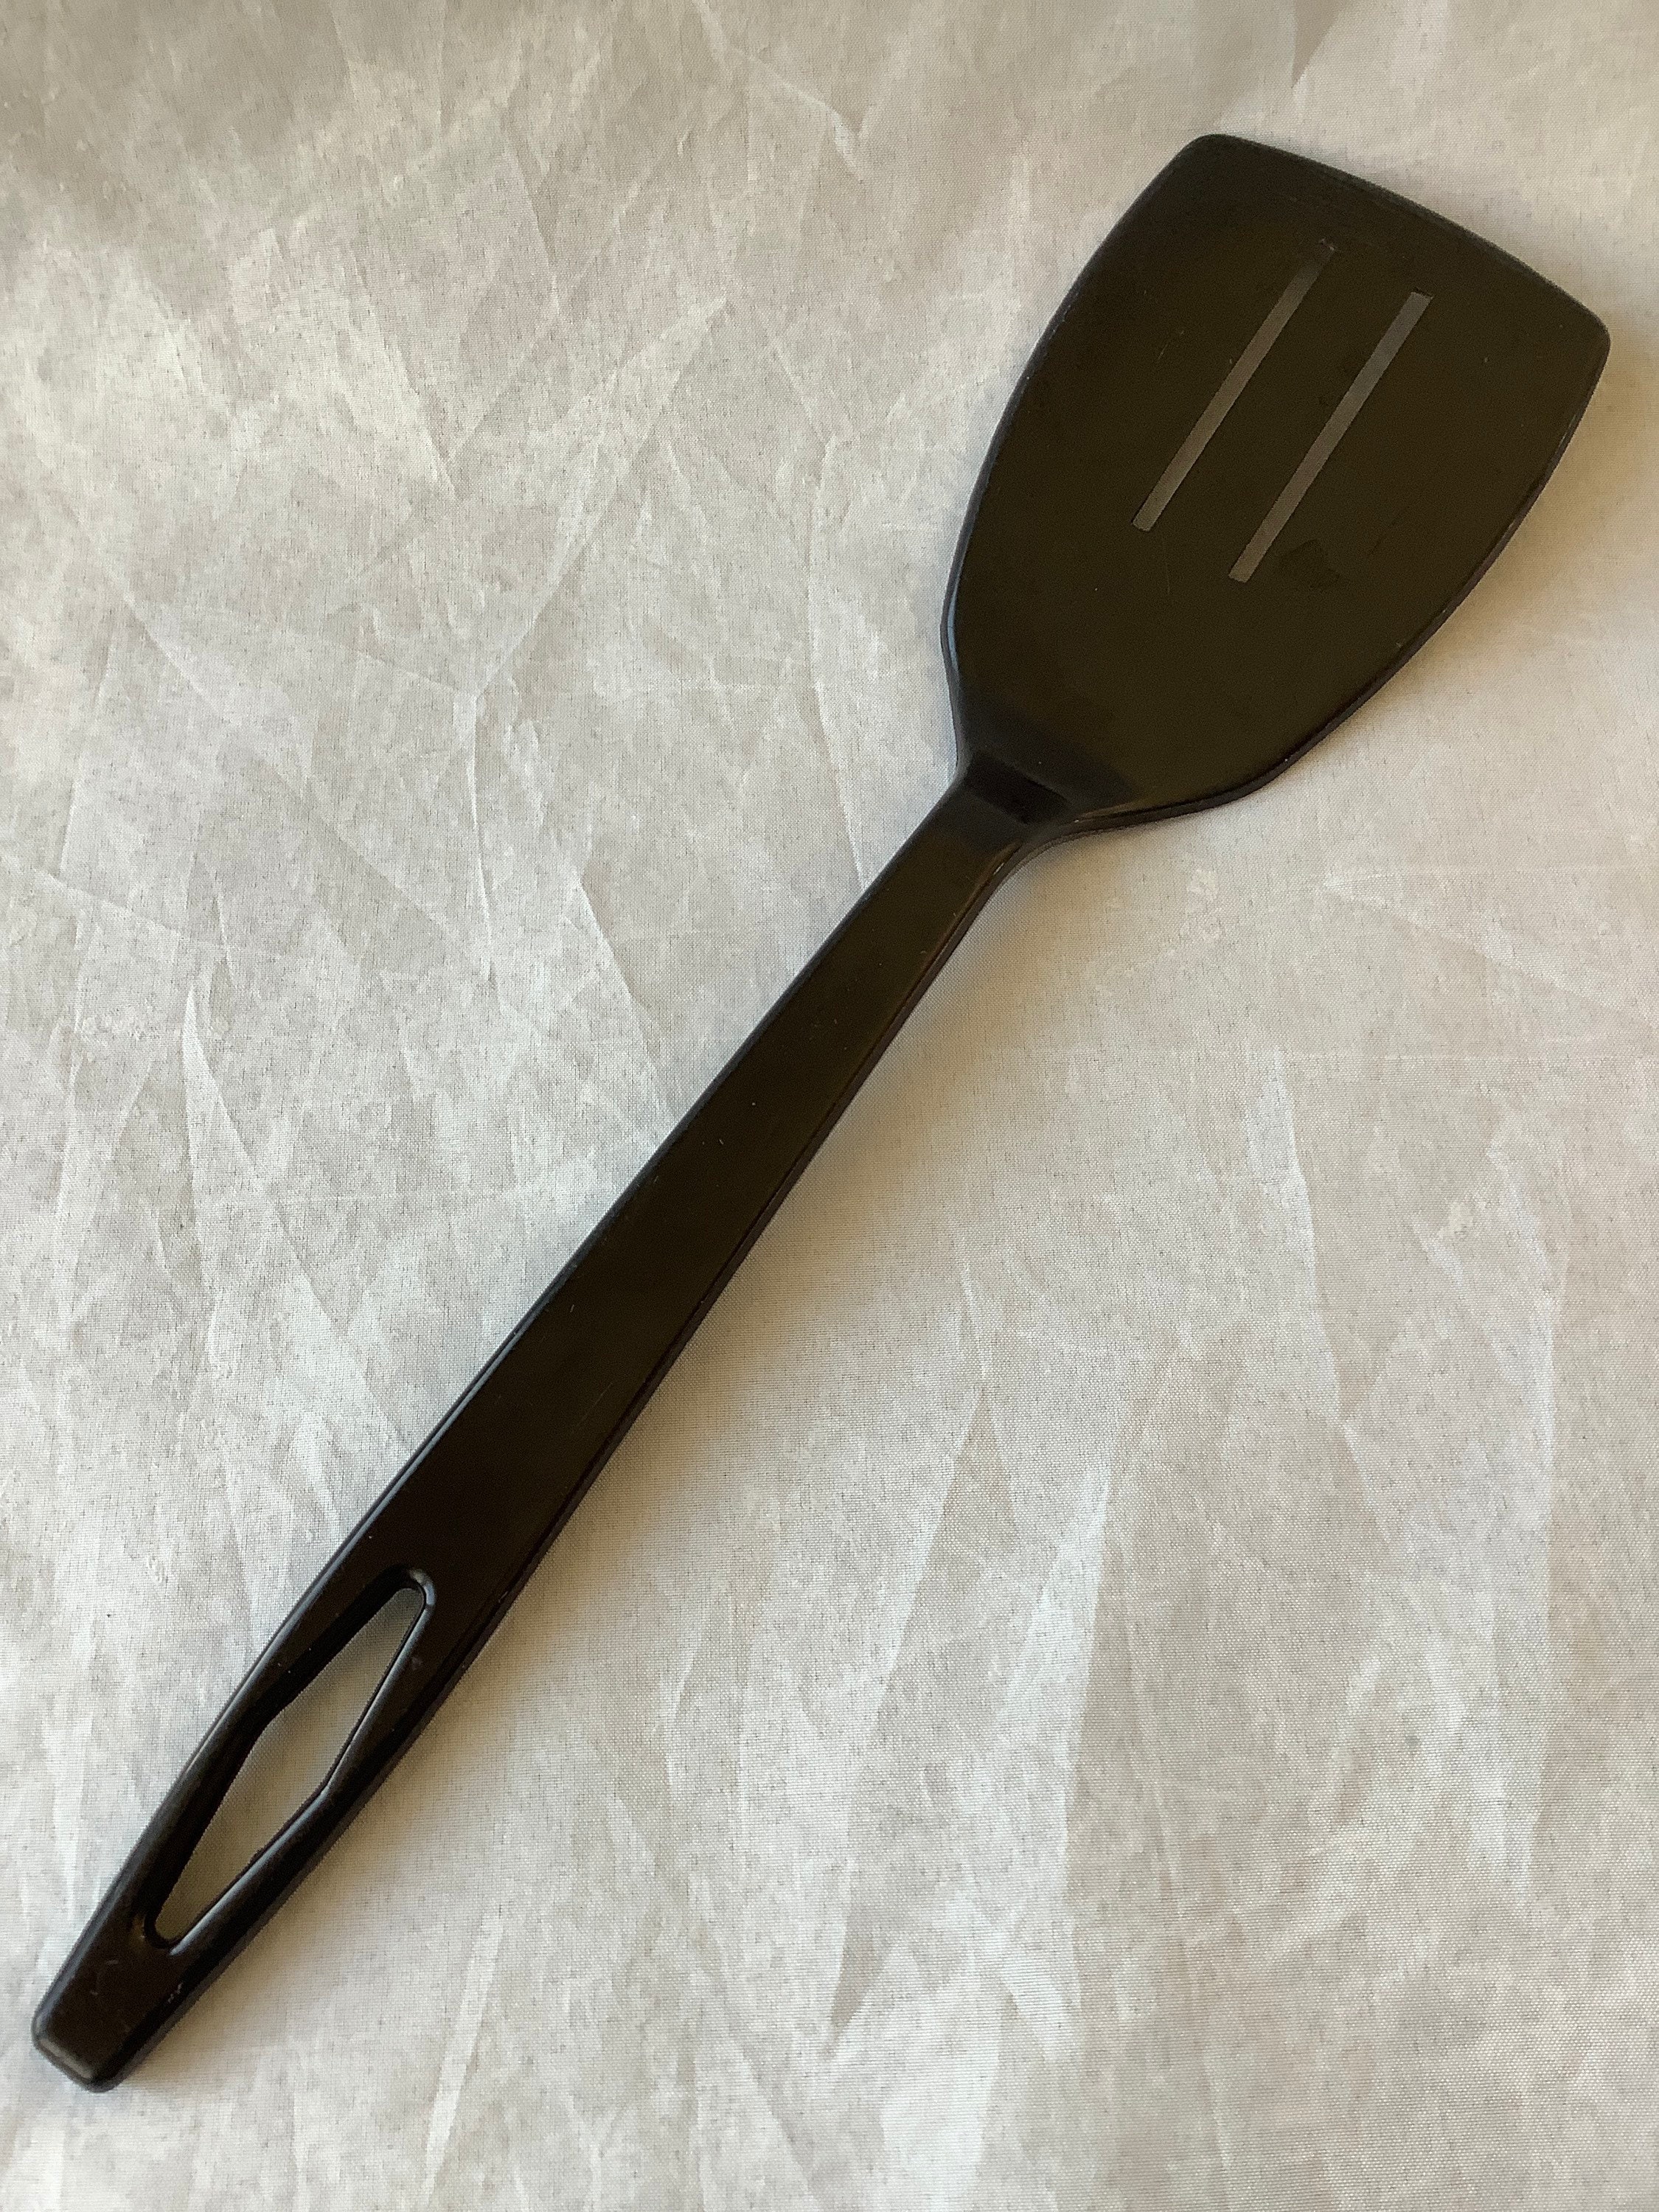 Assorted Plastic Nylon Kitchen Utensils Vintage Slotted Spoon